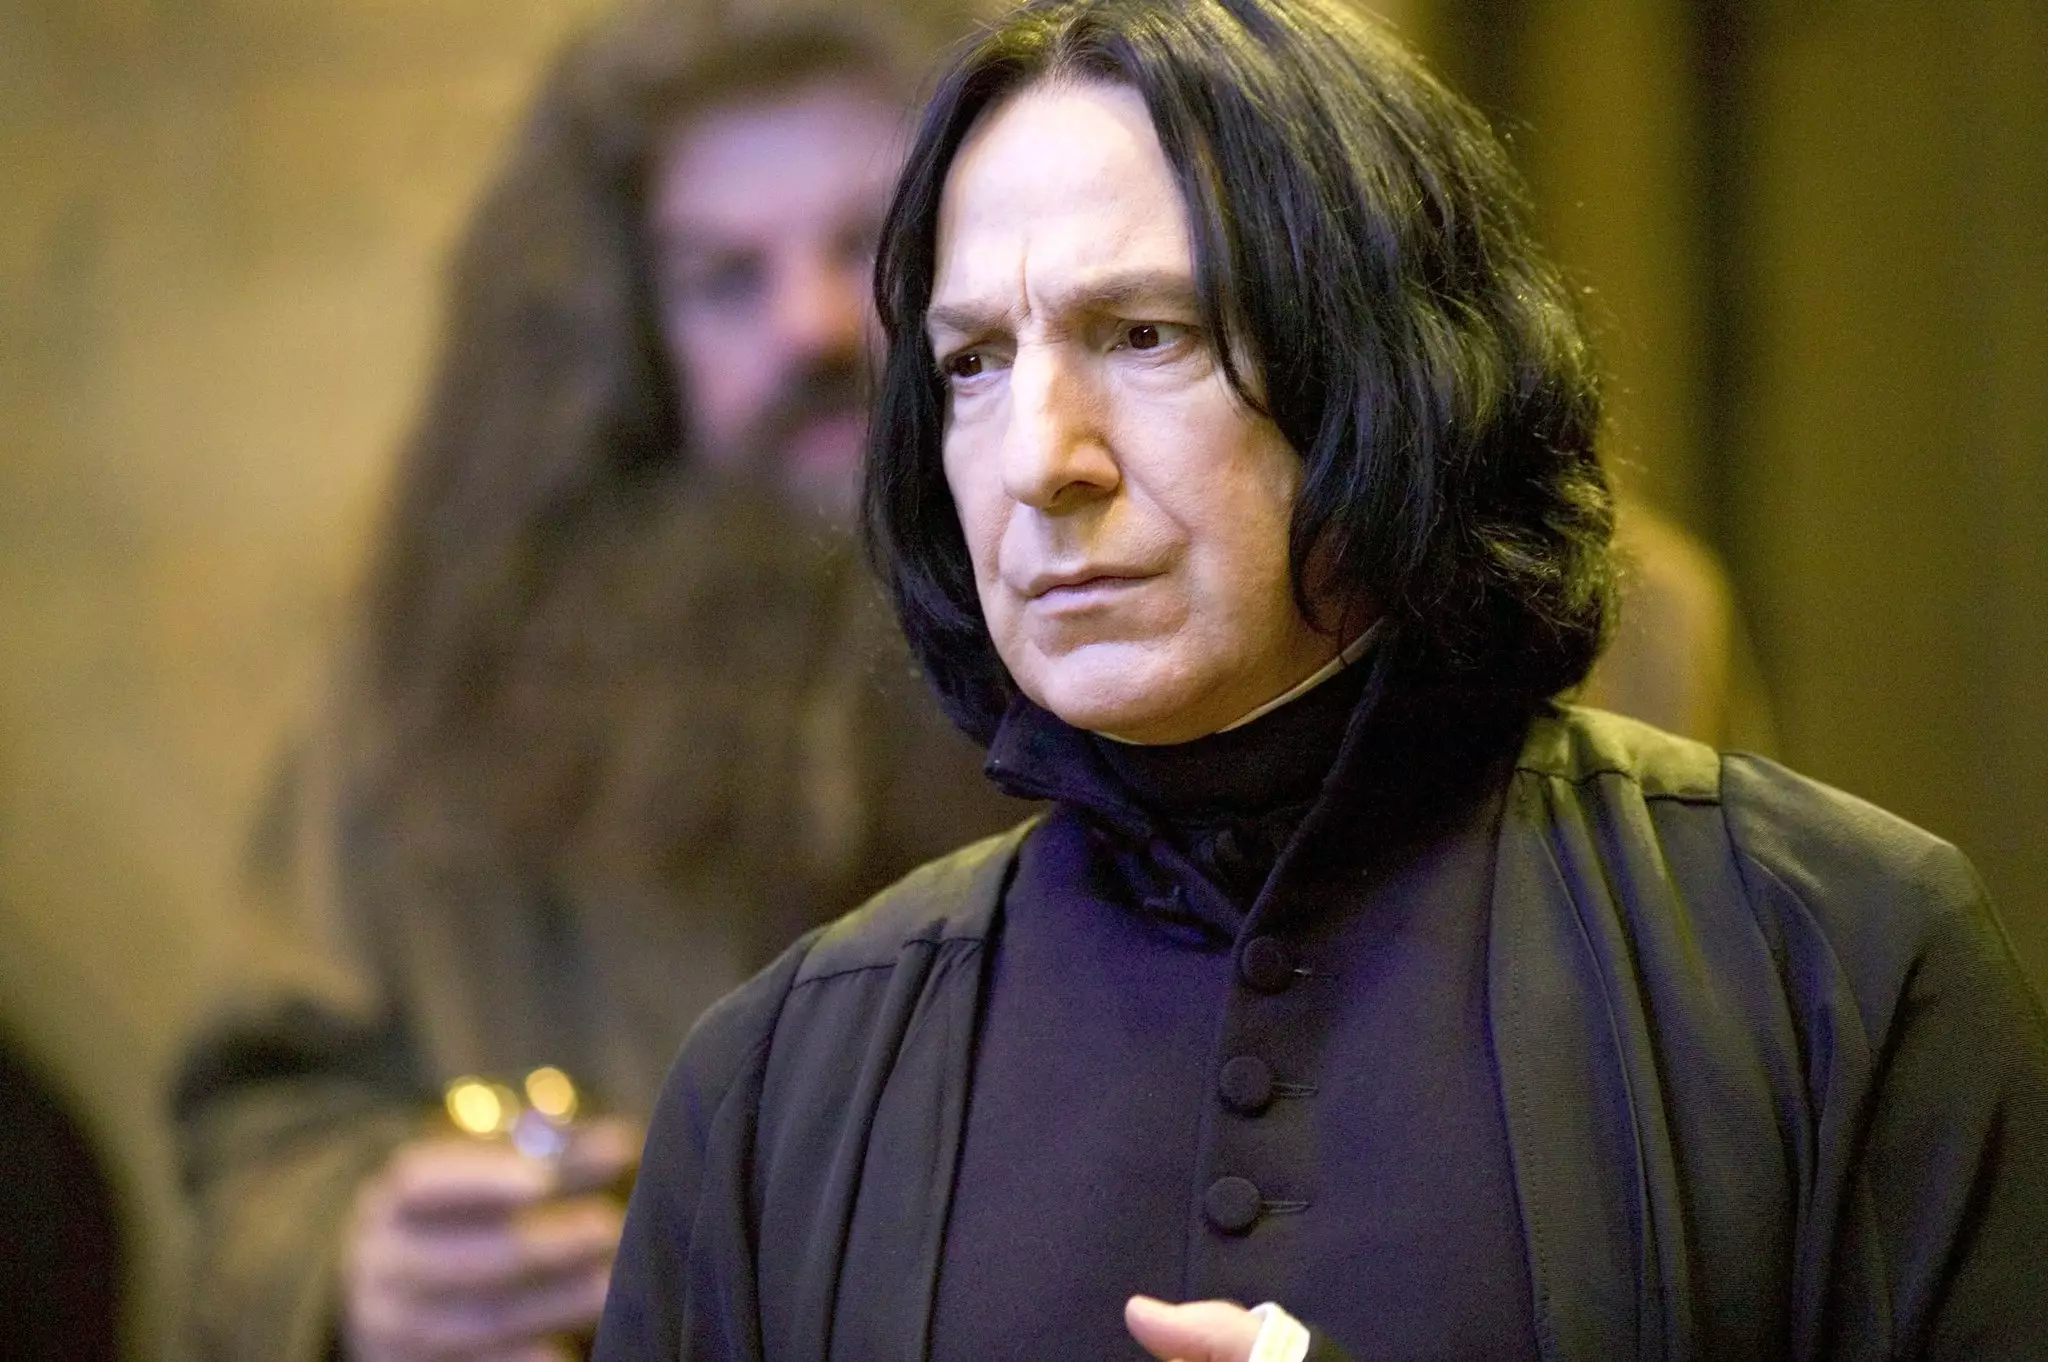 Alan Rickman played Severus Snape in Harry Potter.